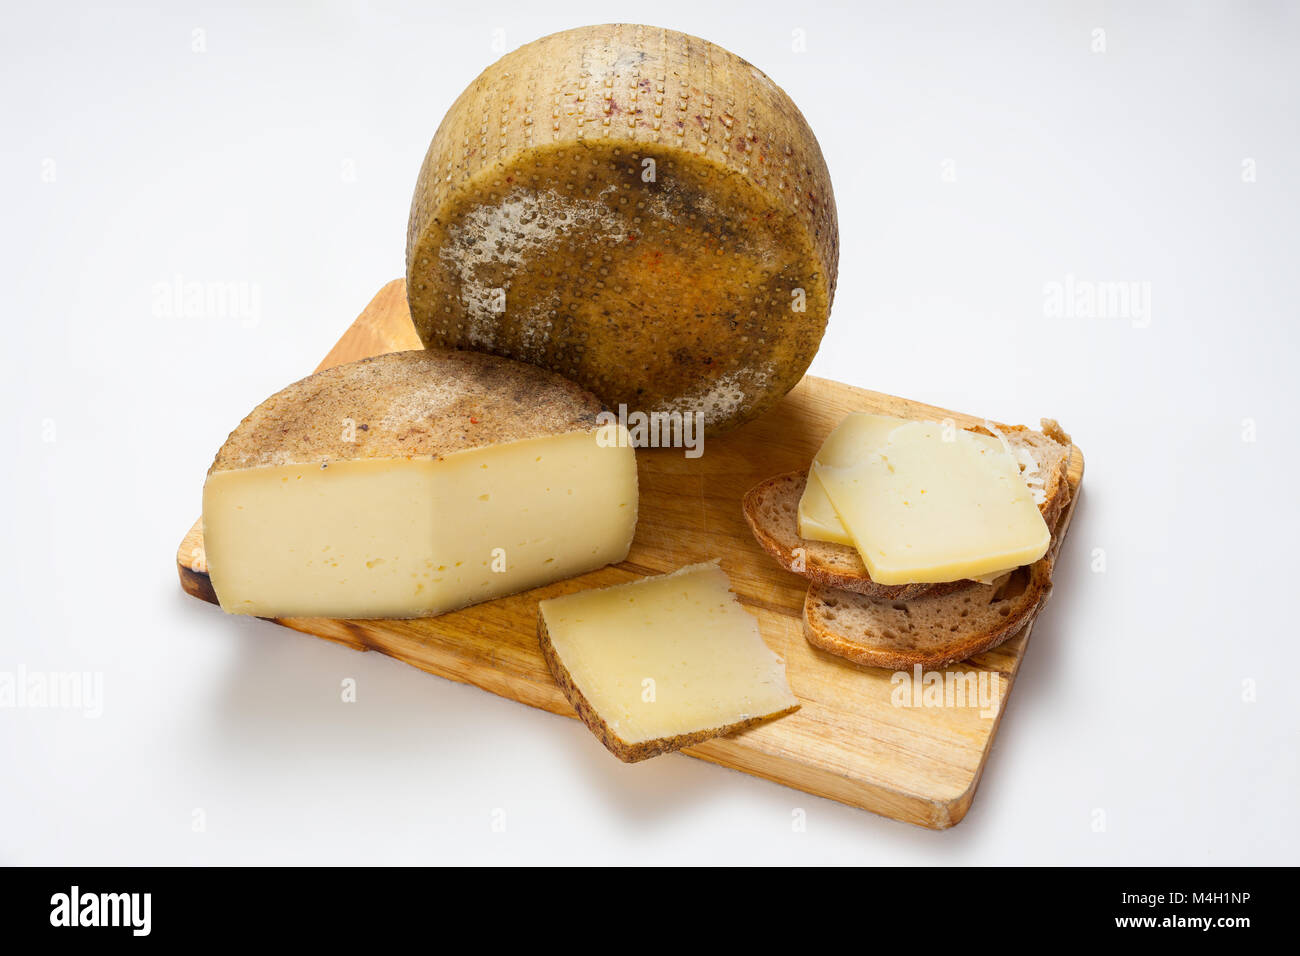 Abruzzo pecorino cheese on wooden cutting board. Still life on white background. Abruzzo, Italy, Europe Stock Photo